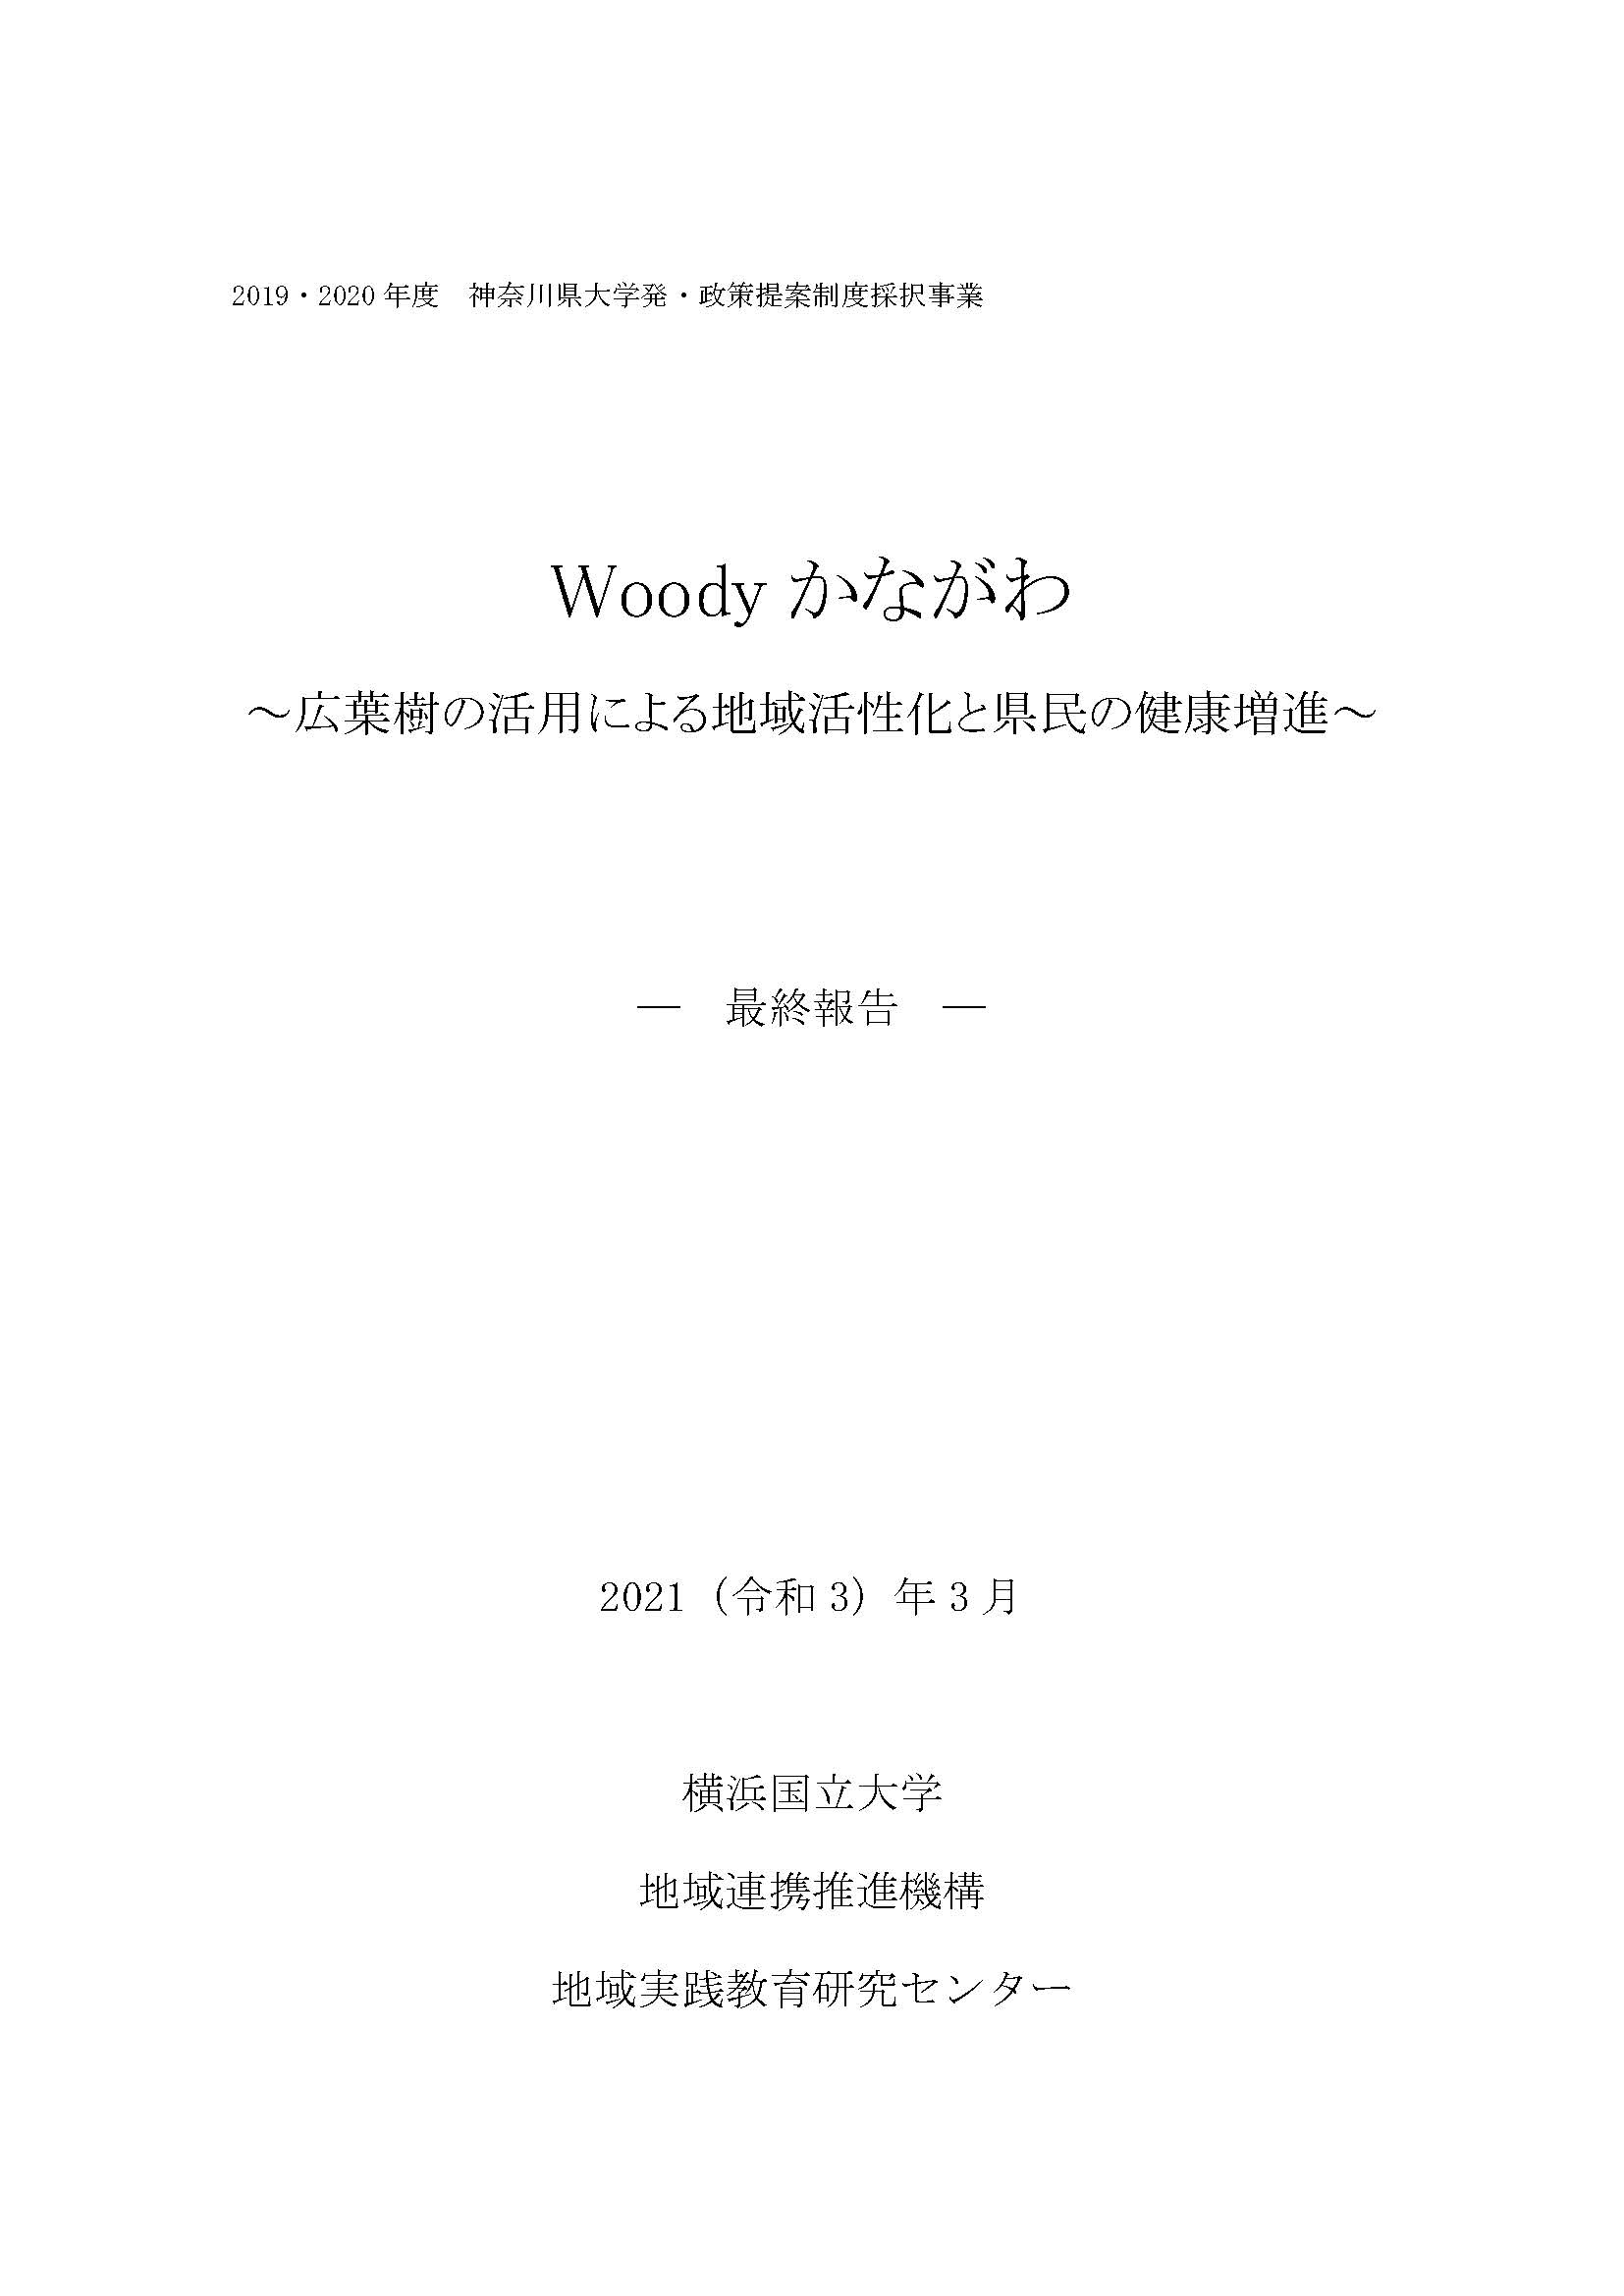 「Woodyかながわ～広葉樹の活用による地域活性化と県民の健康増進～」報告書・神奈川の美しい広葉樹林50選ガイドマップの公開